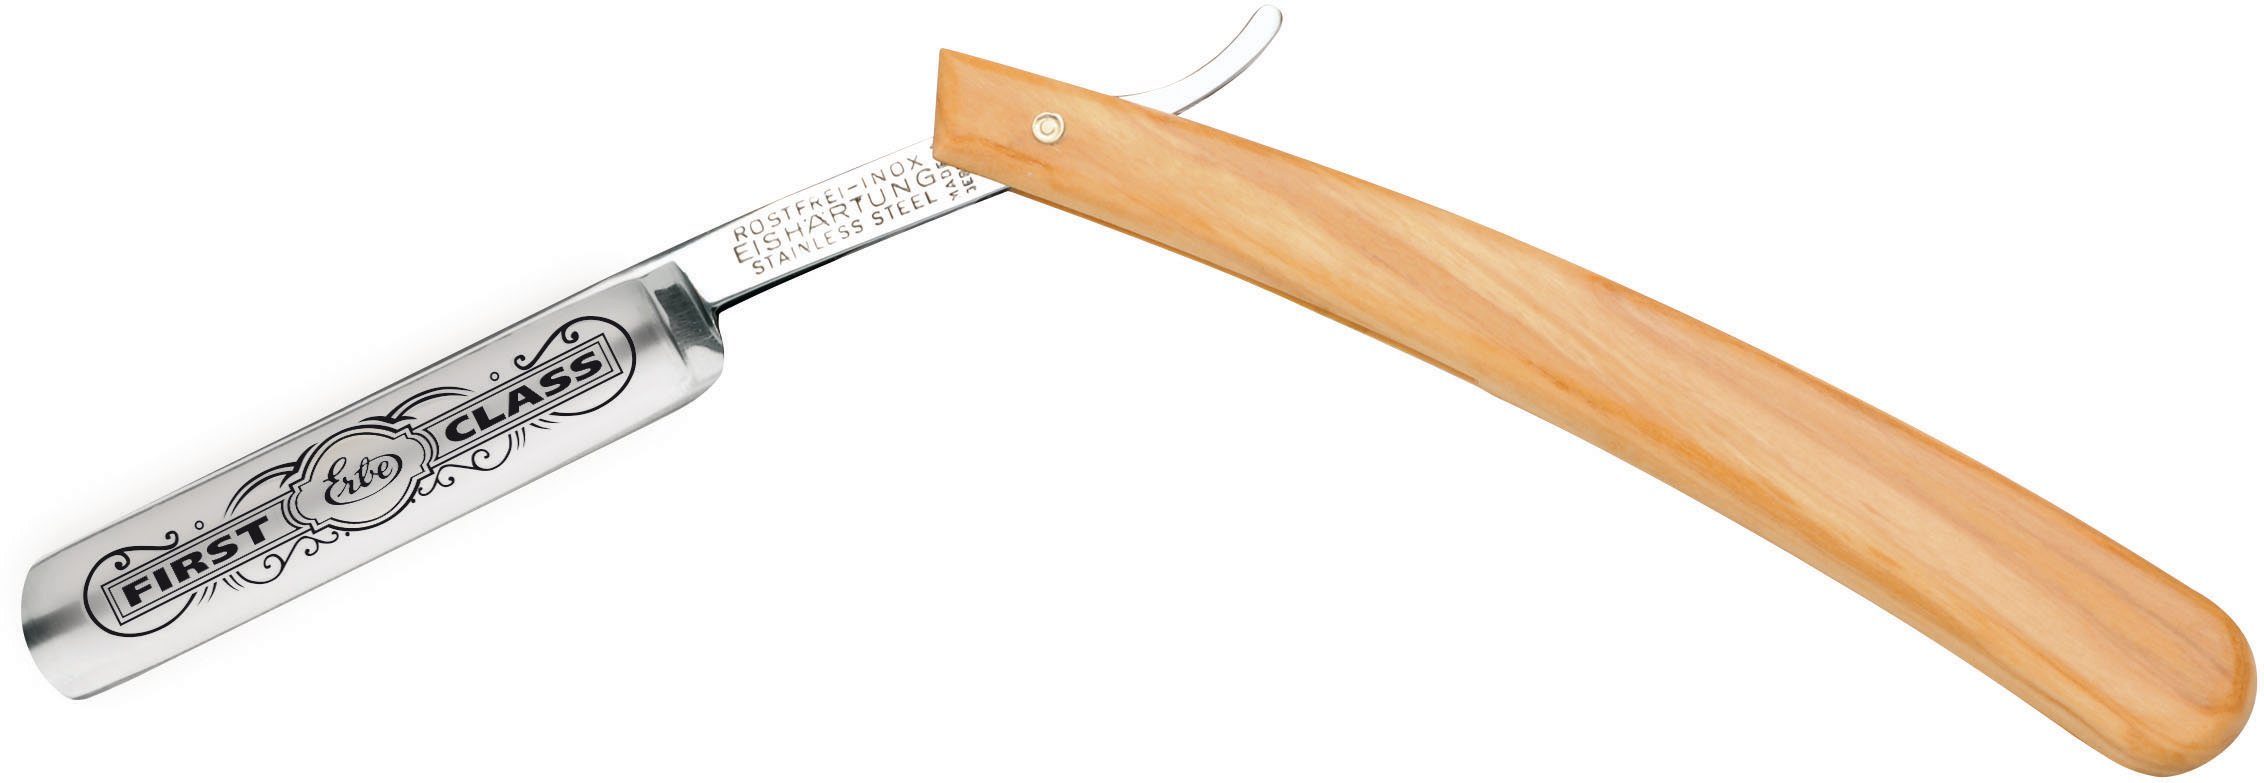 Qualitäts-Rasiermesser Olivenholz-Griff mit Rasiermesser ERBE